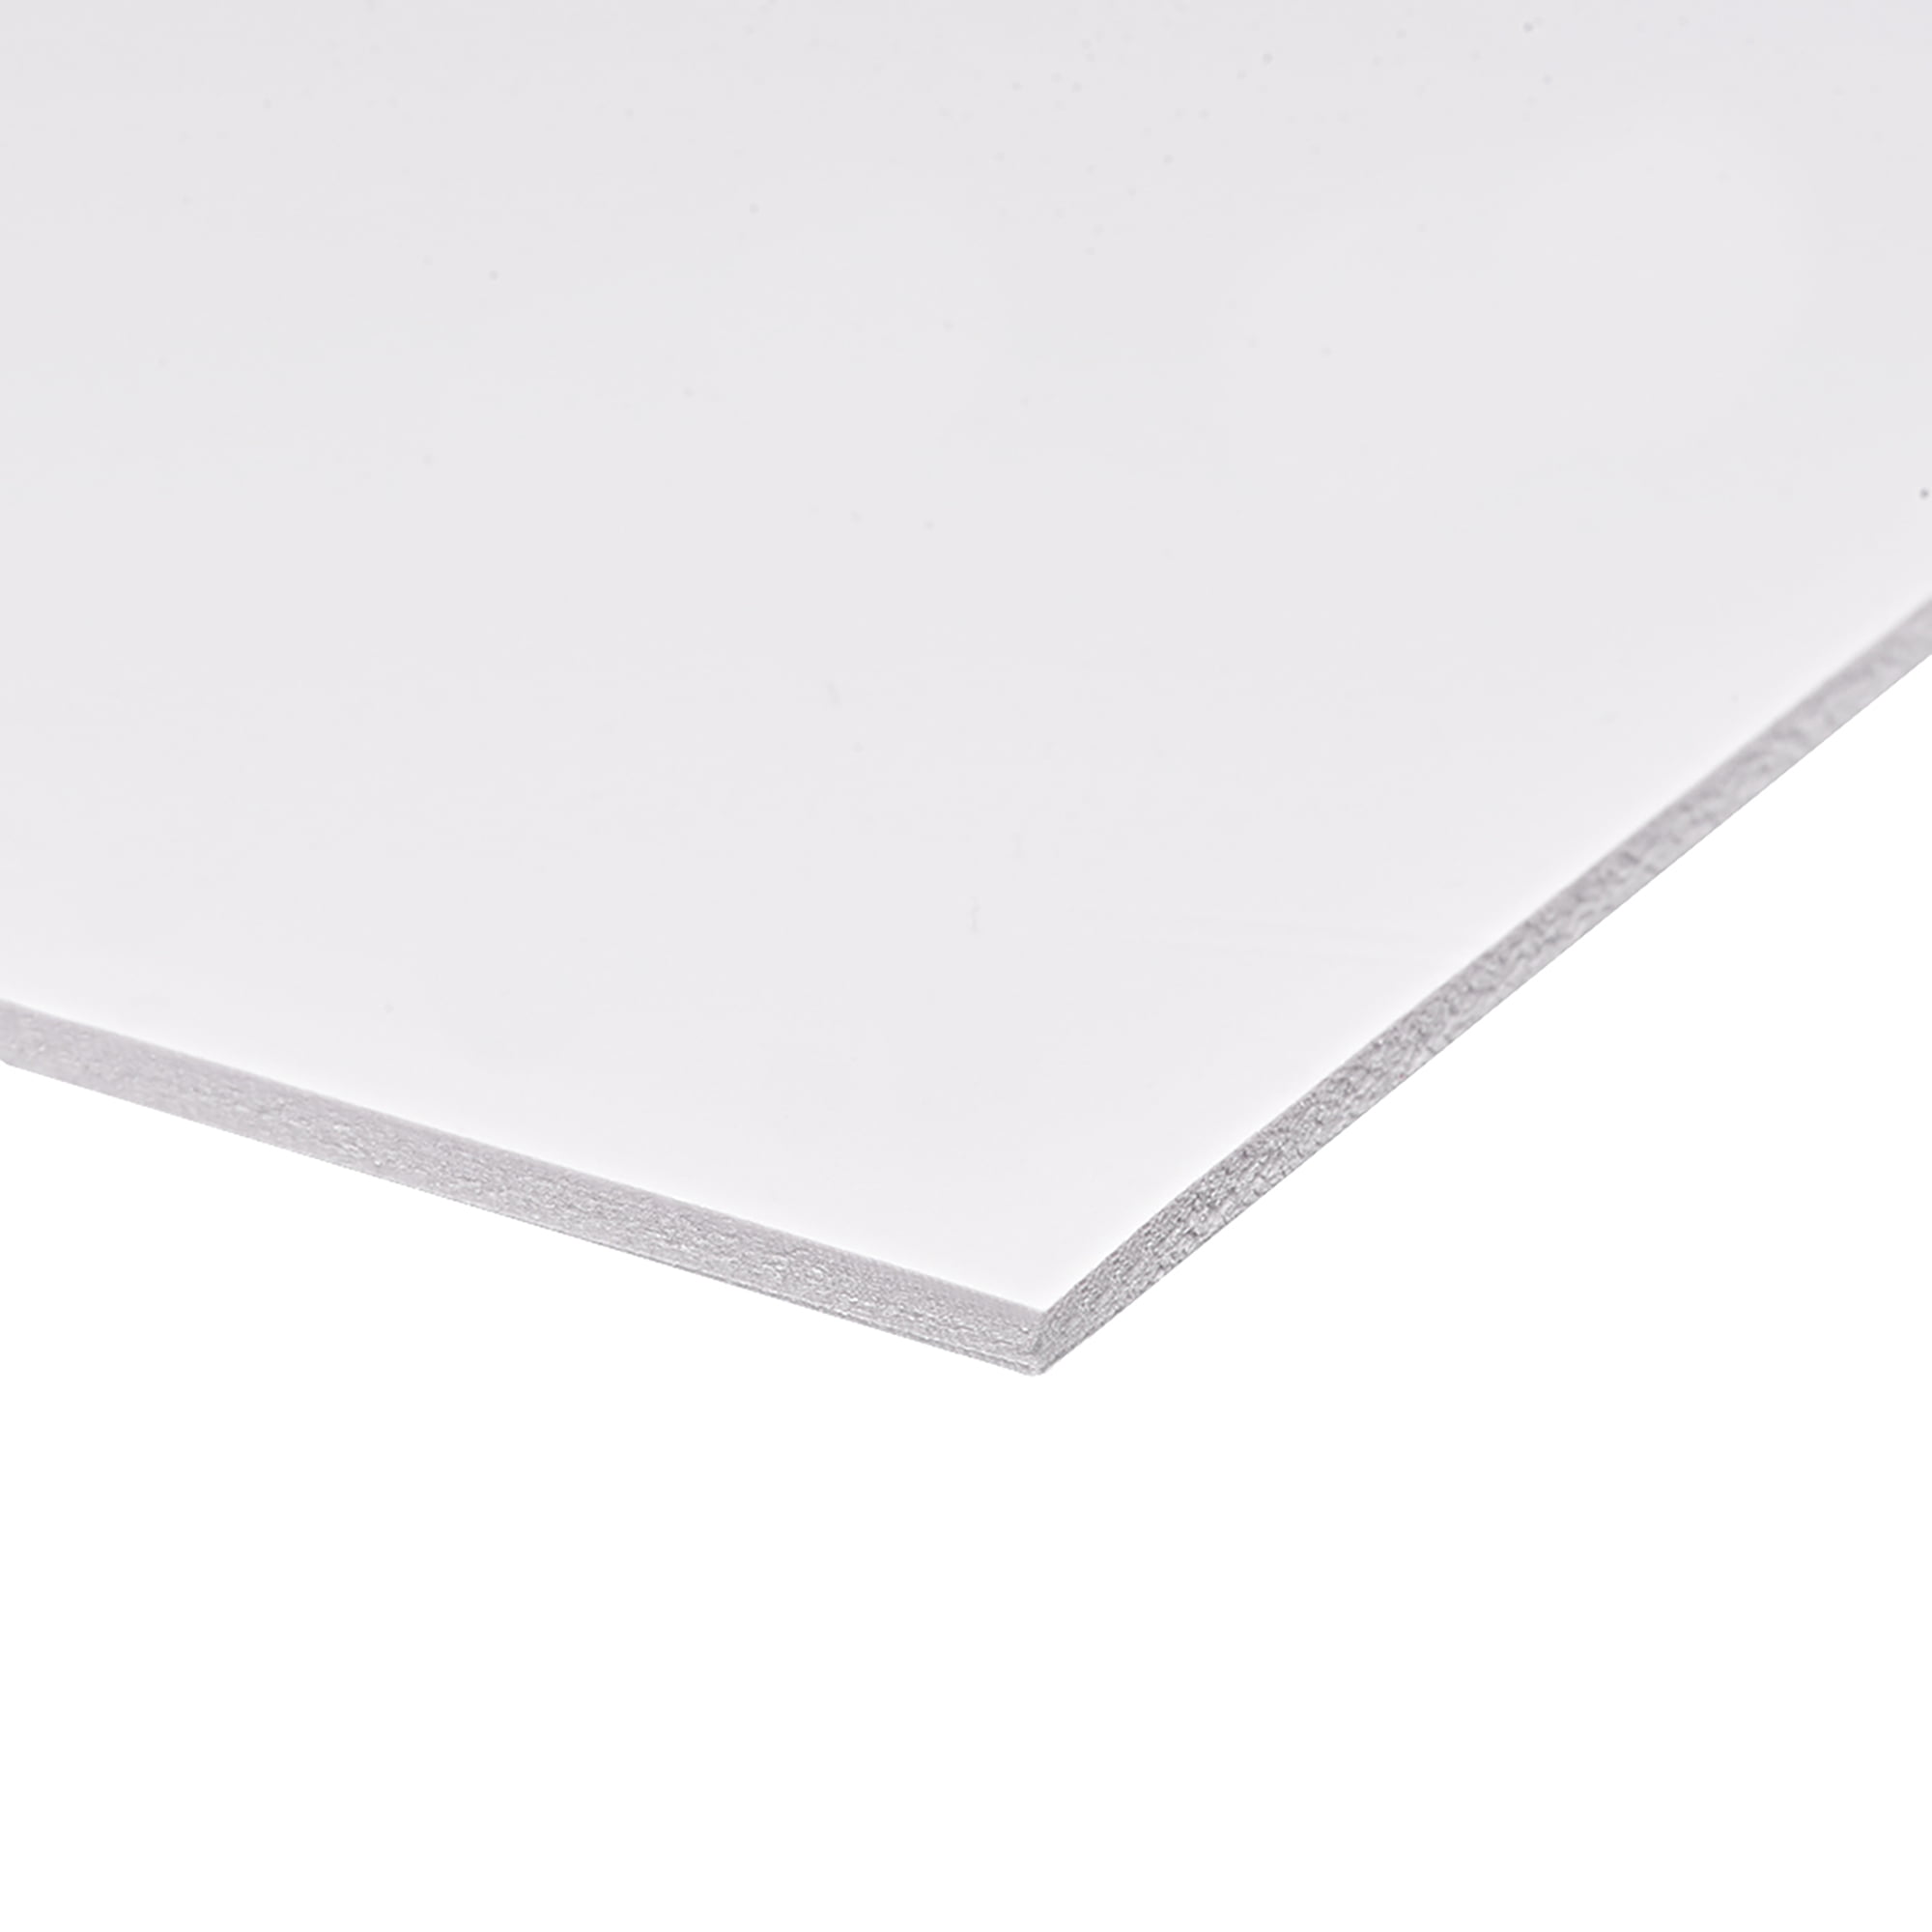 Details about   PVC Foam Board Sheet,3mmT x 8"W x12“L,White,Double Sided,Expanded PVC Sheet 3pcs 